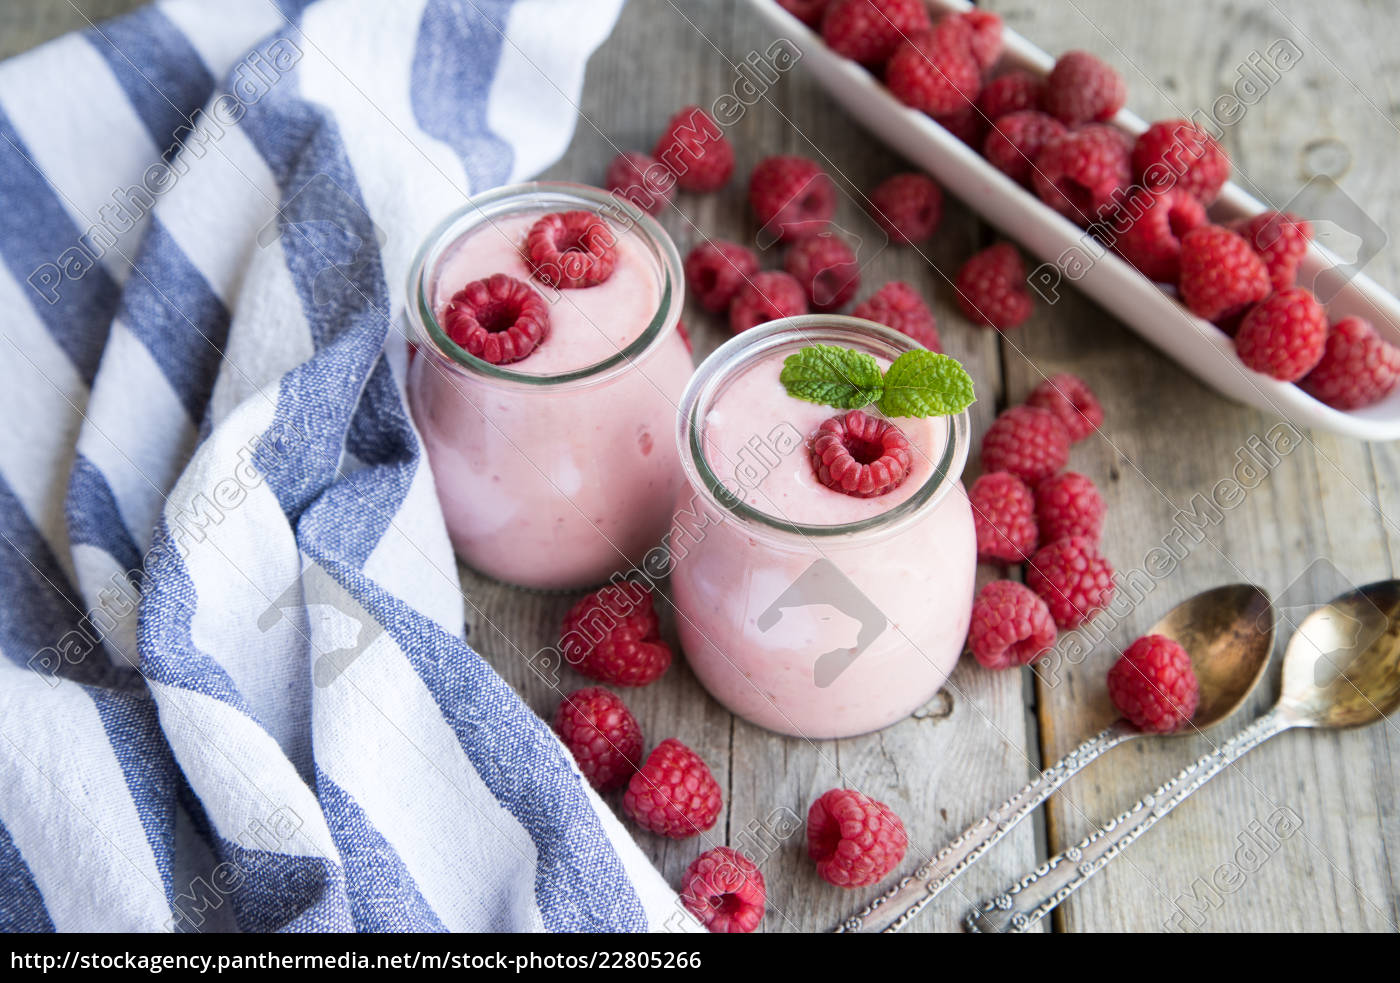 Joghurt-Smoothie mit Himbeeren Fruchtdessert. - Stock Photo - #22805266 ...